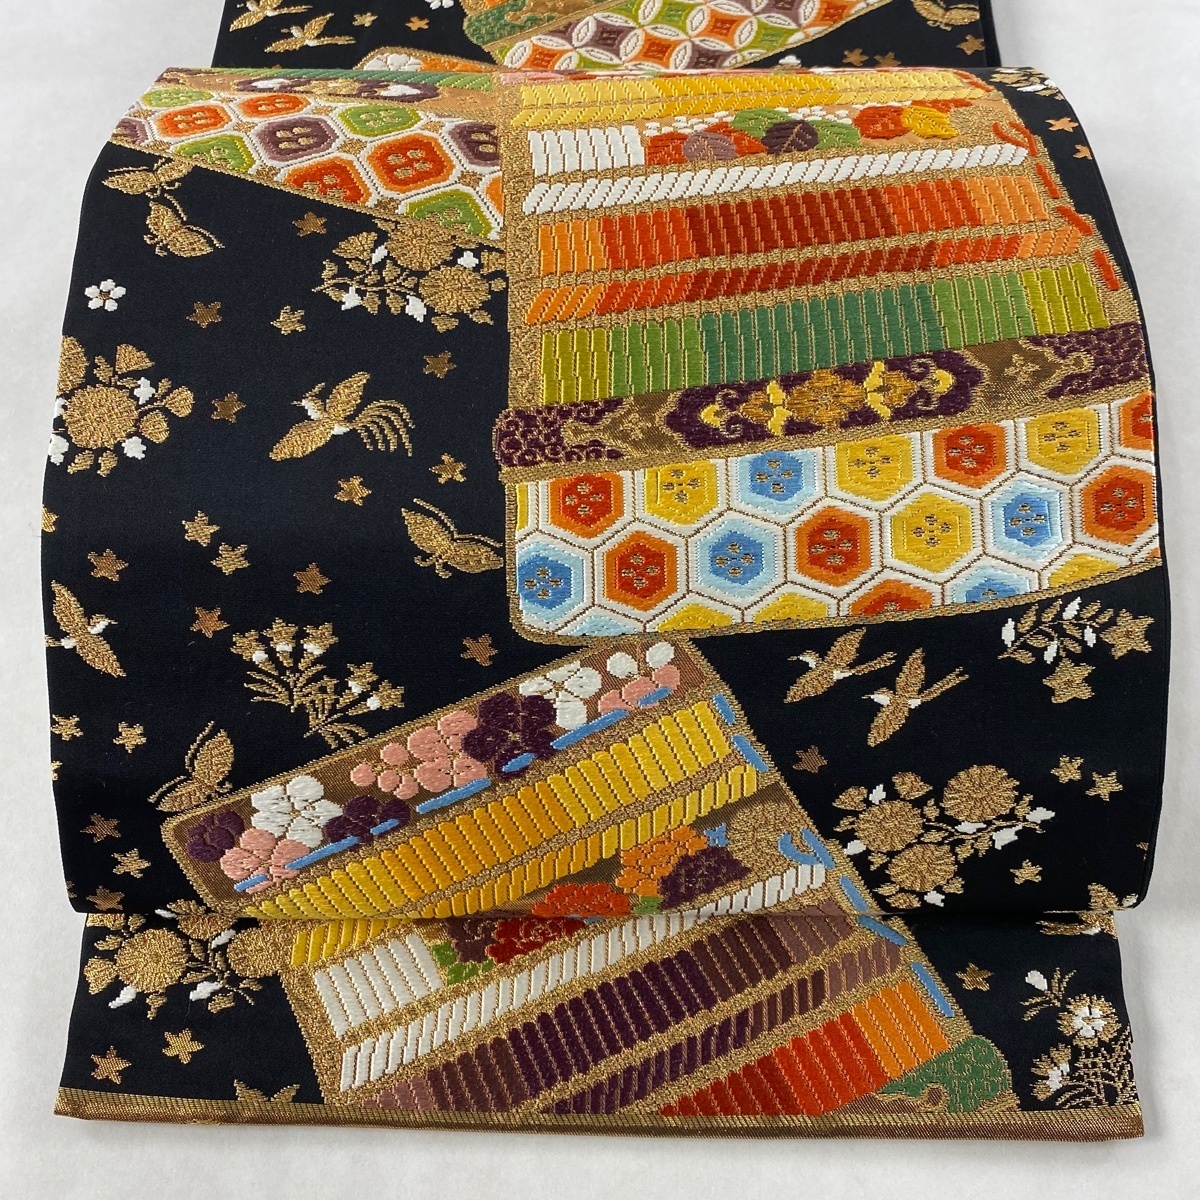 ヤフオク! -河合美術織物袋帯の中古品・新品・未使用品一覧